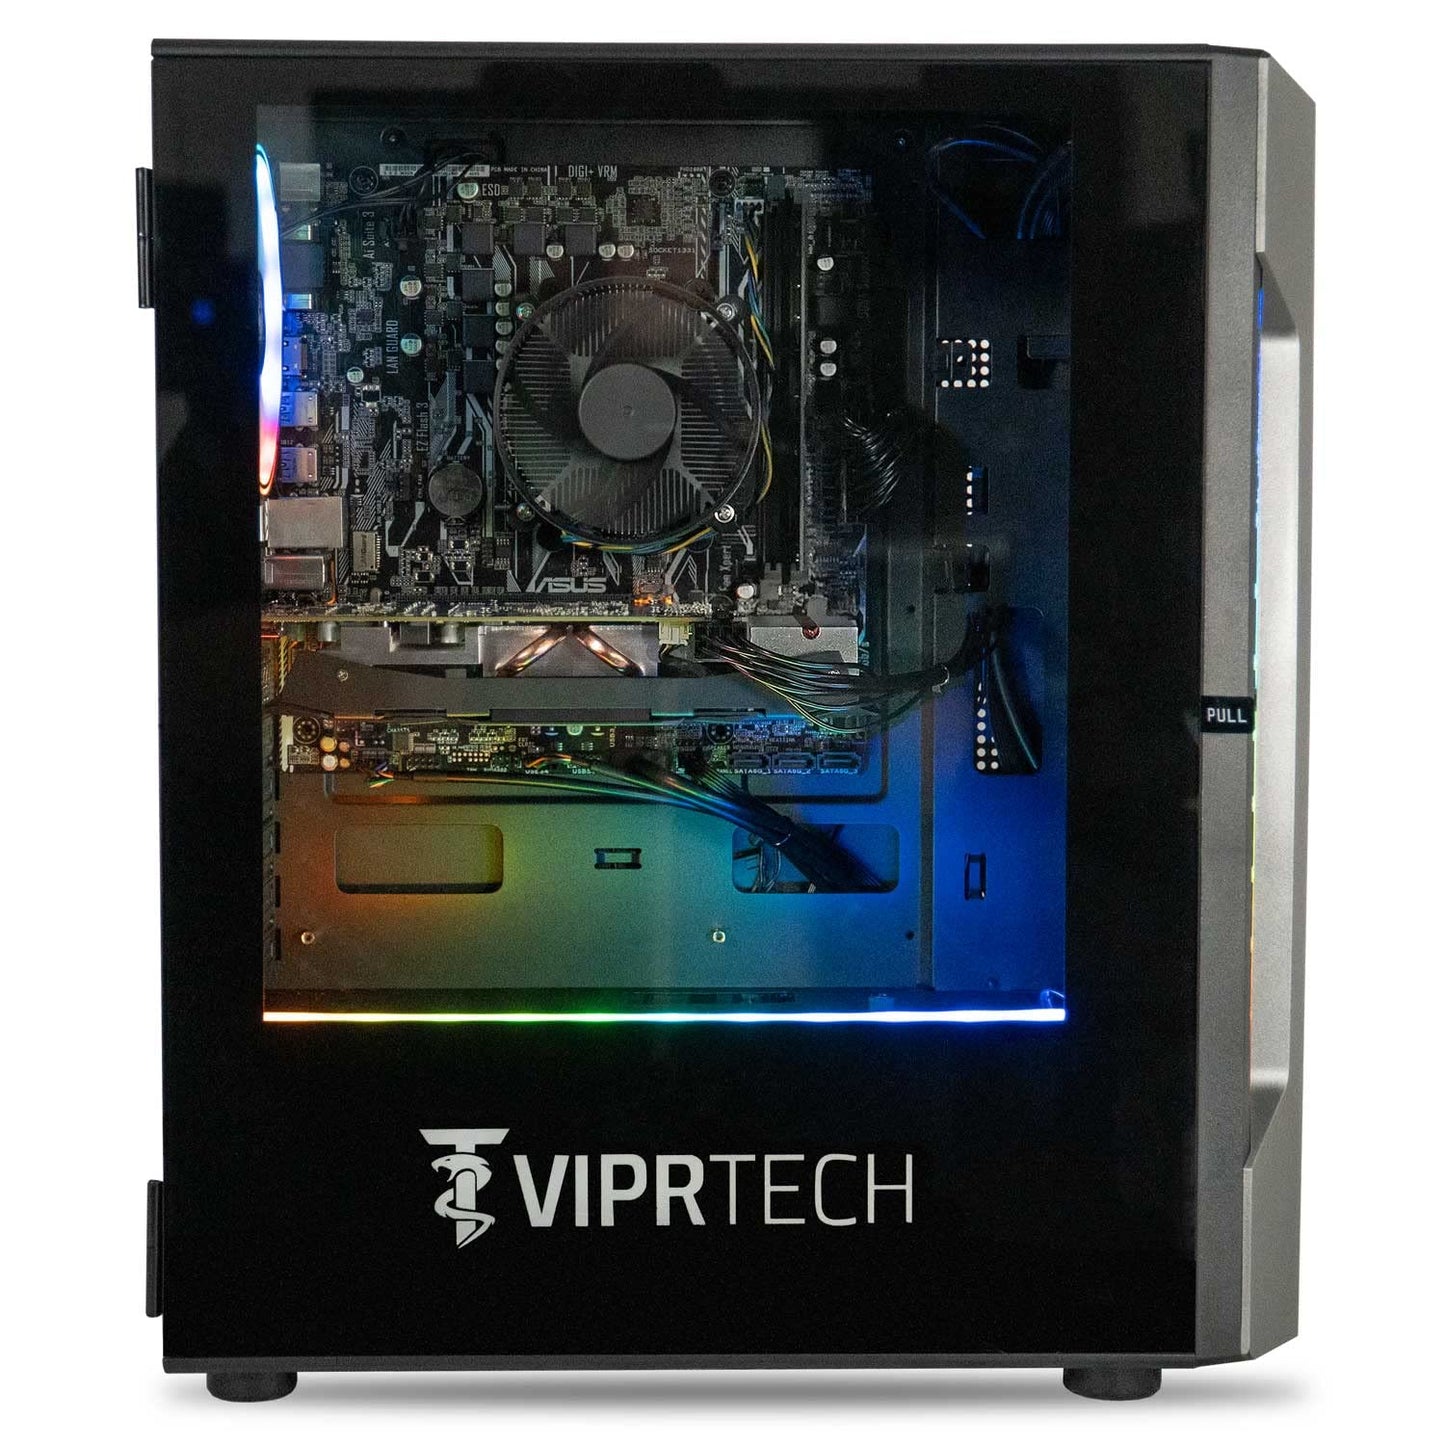 ViprTech Rebel 1.0 Gaming PC - AMD Ryzen 5 (12-LCore 3.9Ghz), GTX 1660 Super 6GB, 16GB DDR4 3200, 512GB NVMe SSD, WiFi, RGB, Windows 11 Pro, Warranty, Black Desktop Computer